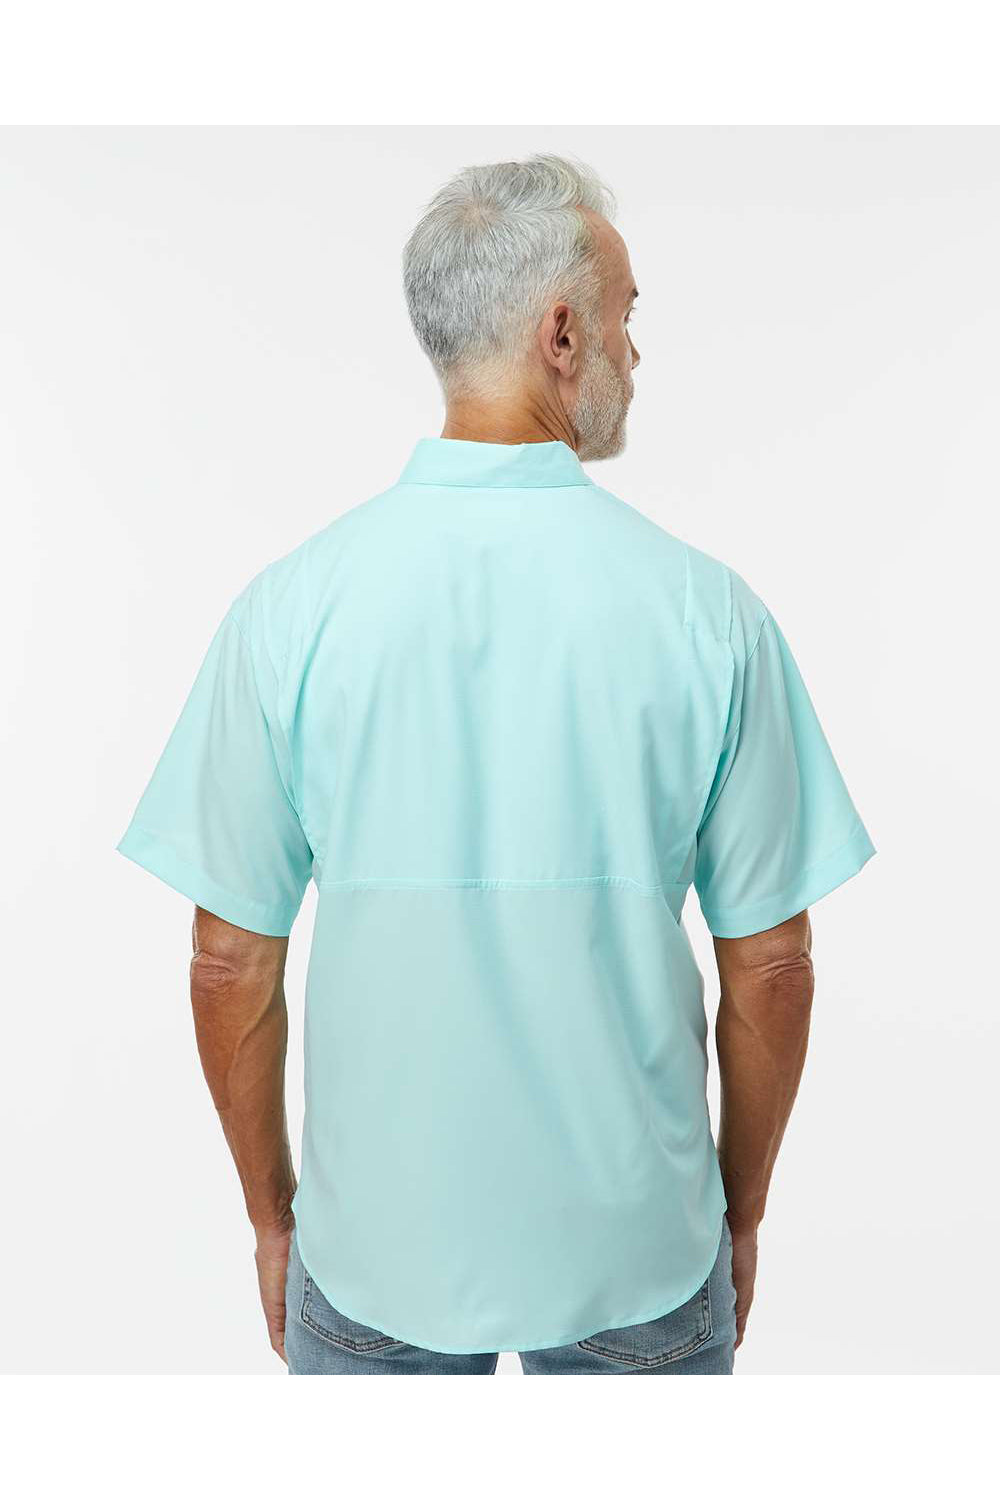 Paragon 700 Mens Hatteras Performance Short Sleeve Button Down Shirt Aqua Blue Model Back